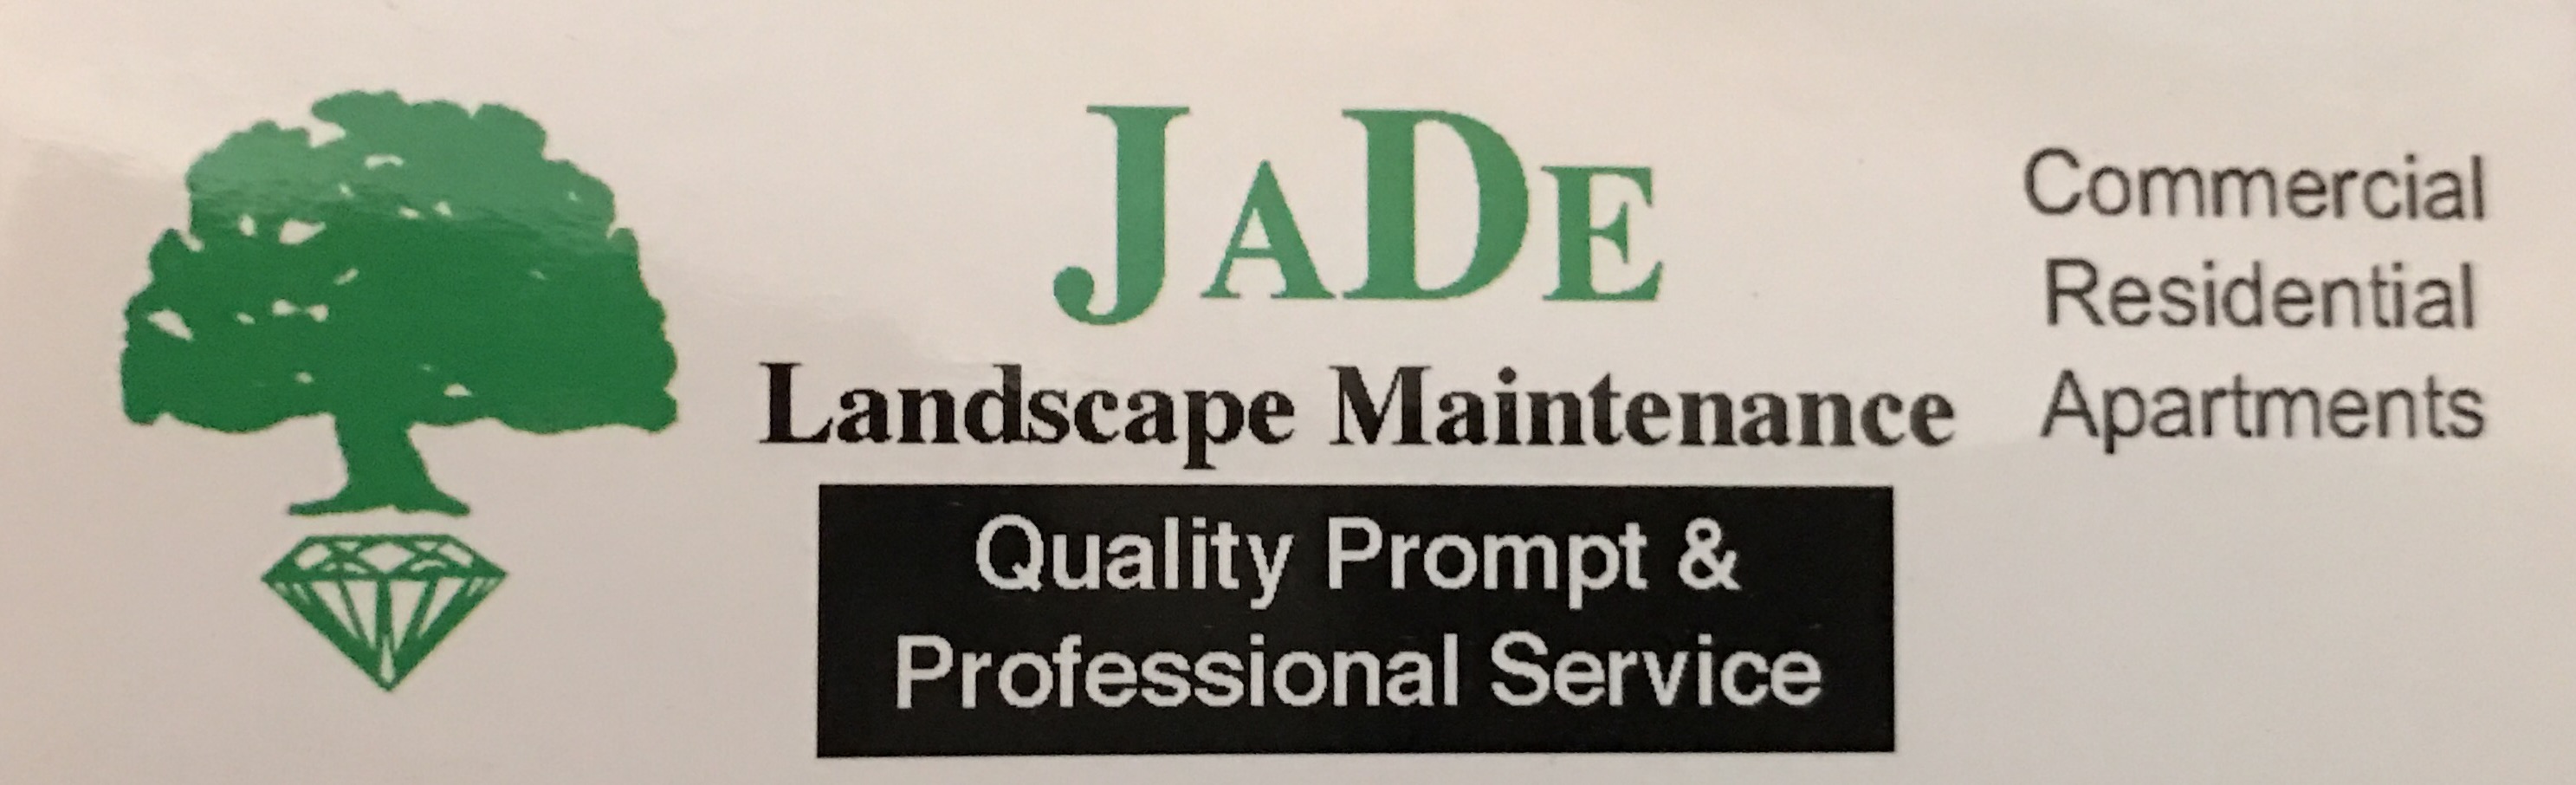 Jade Landscape Maintenance logo